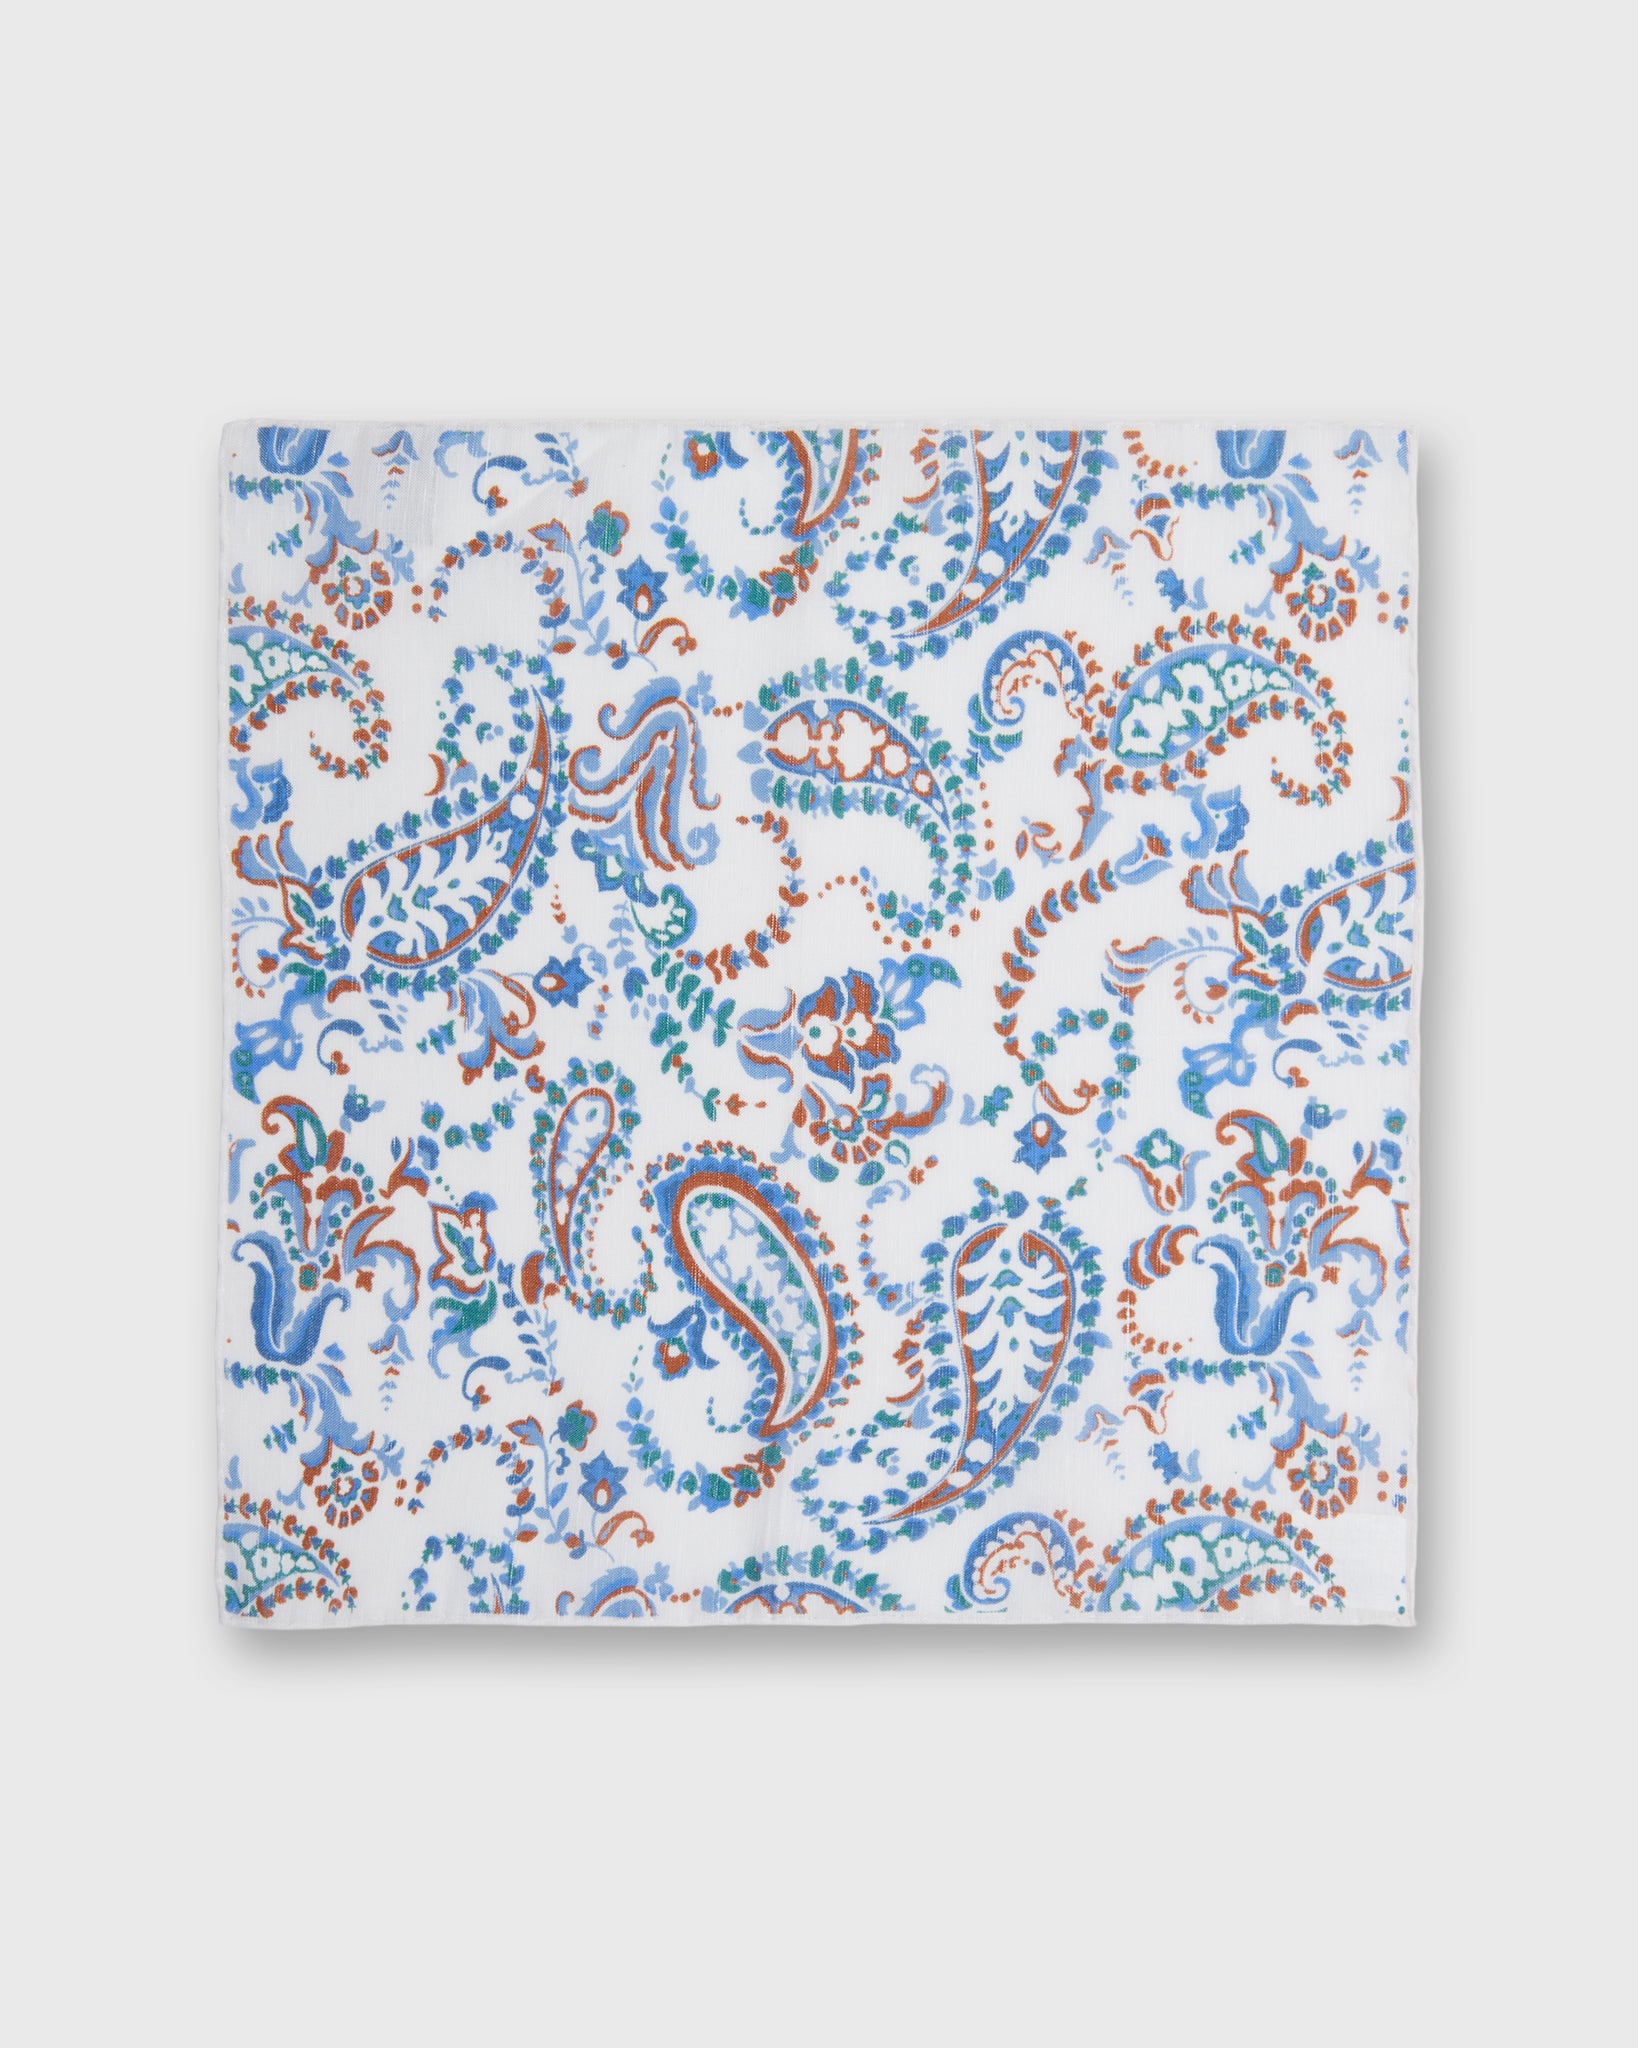 Linen/Cotton Print Pocket Square in Bone/Blue/Tan Paisley Floral